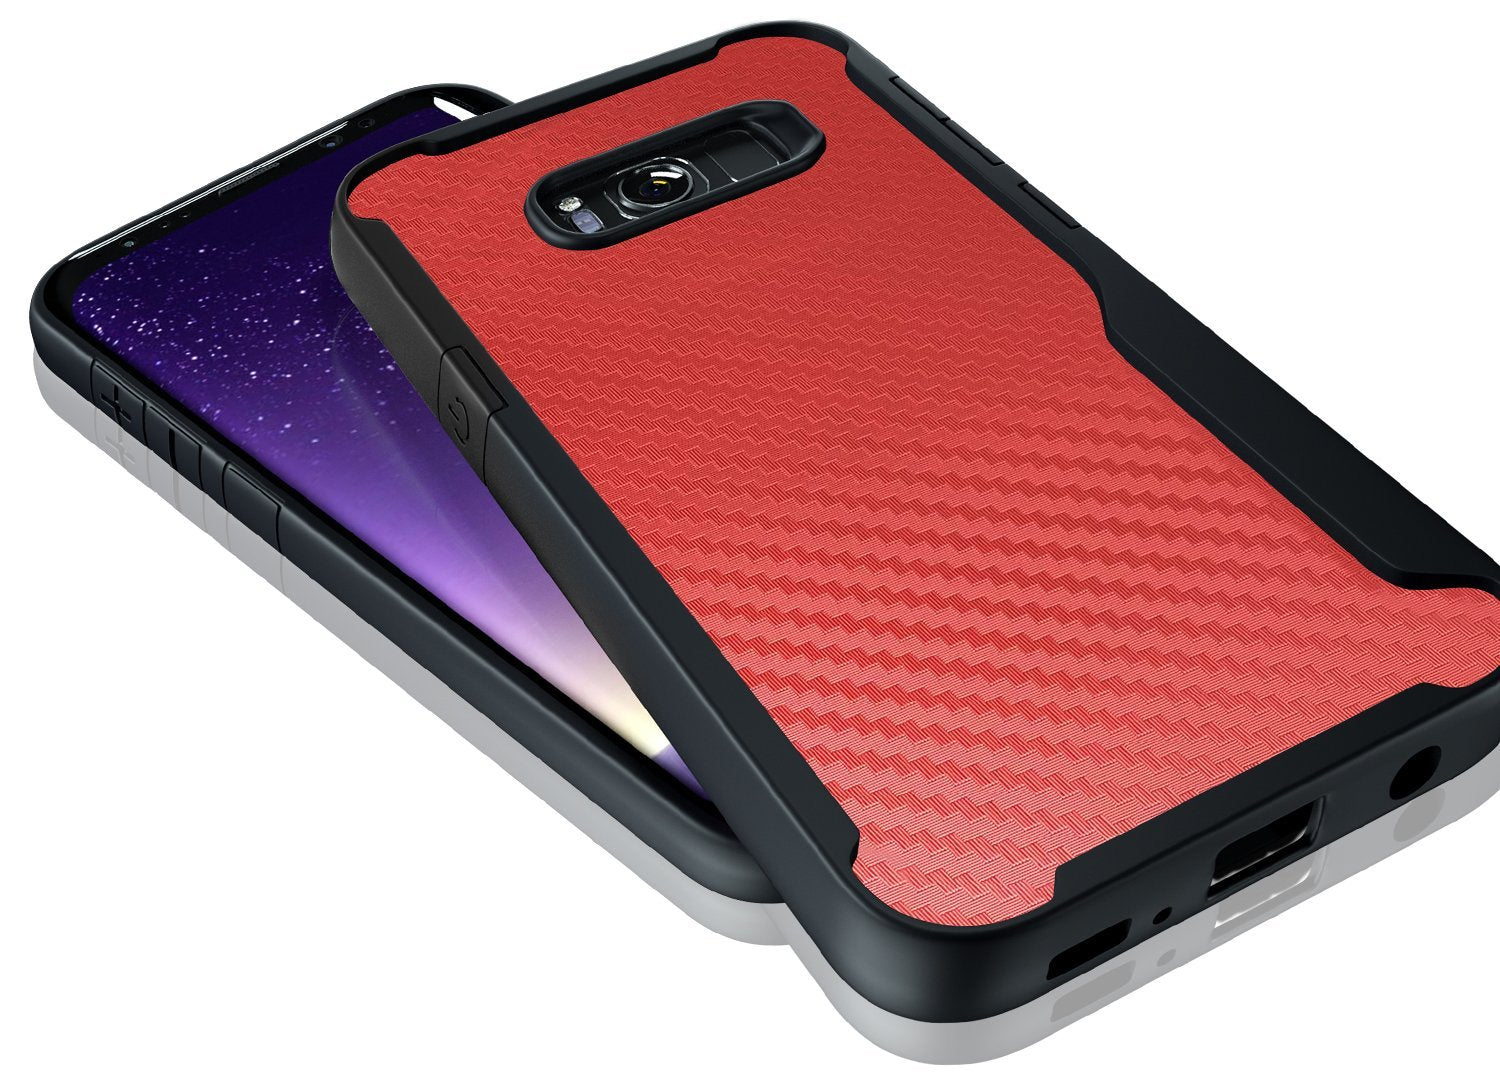 Samsung Galaxy S8+ Kitoo Carbon Fiber Pattern Case Red